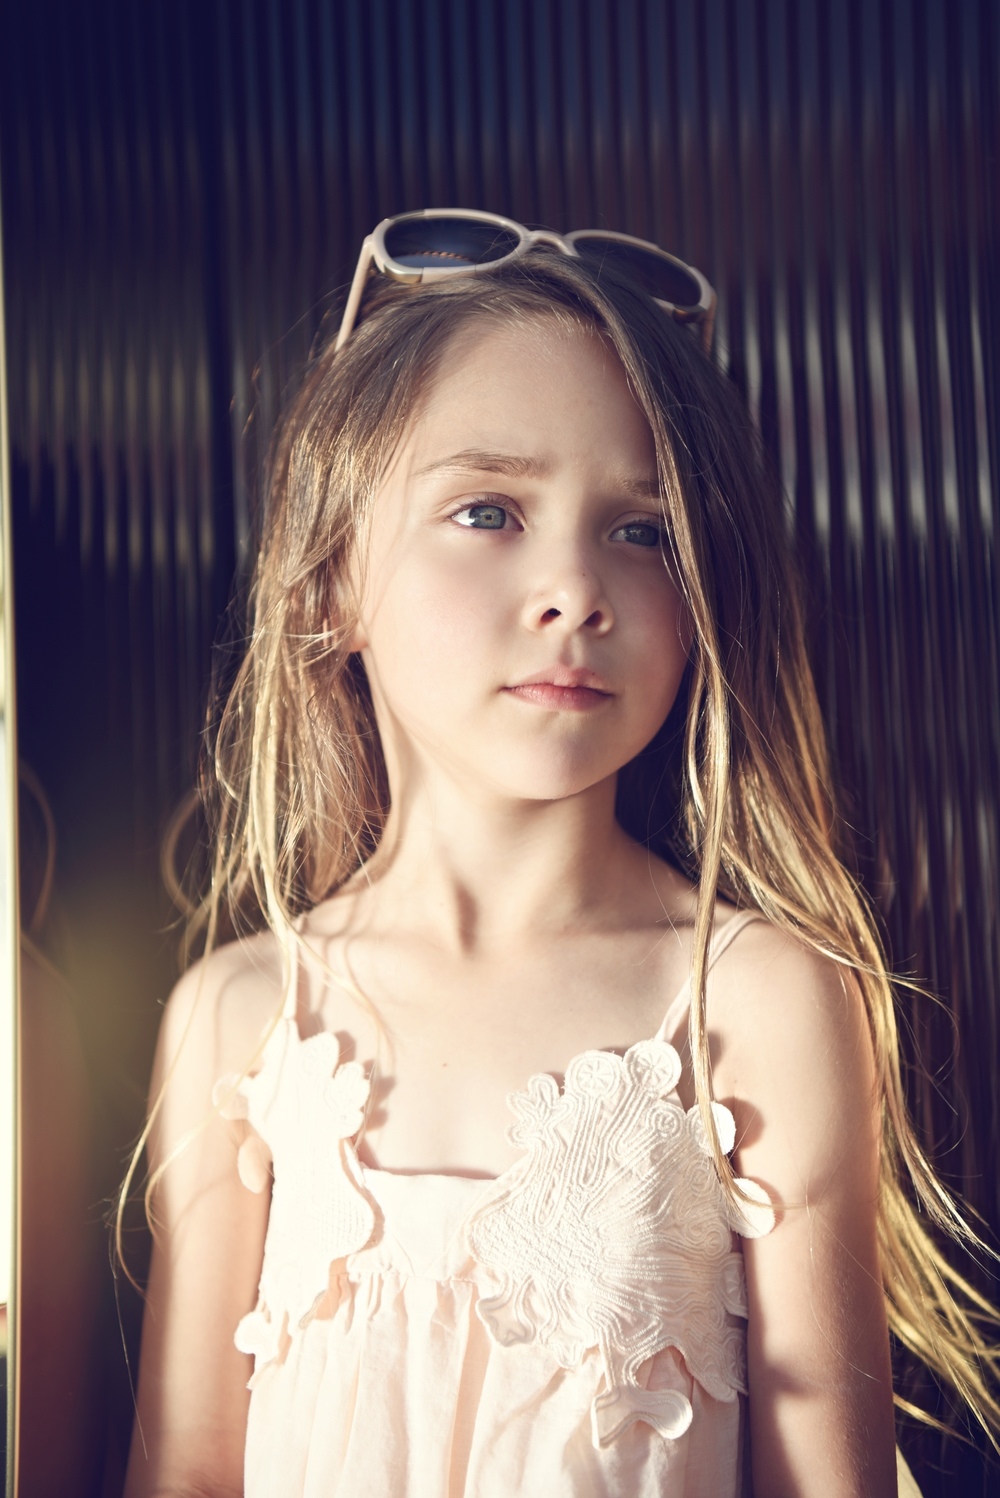 Enfant+Street+Style+by+Gina+Kim+Photography+Chloe+kids-2.jpeg